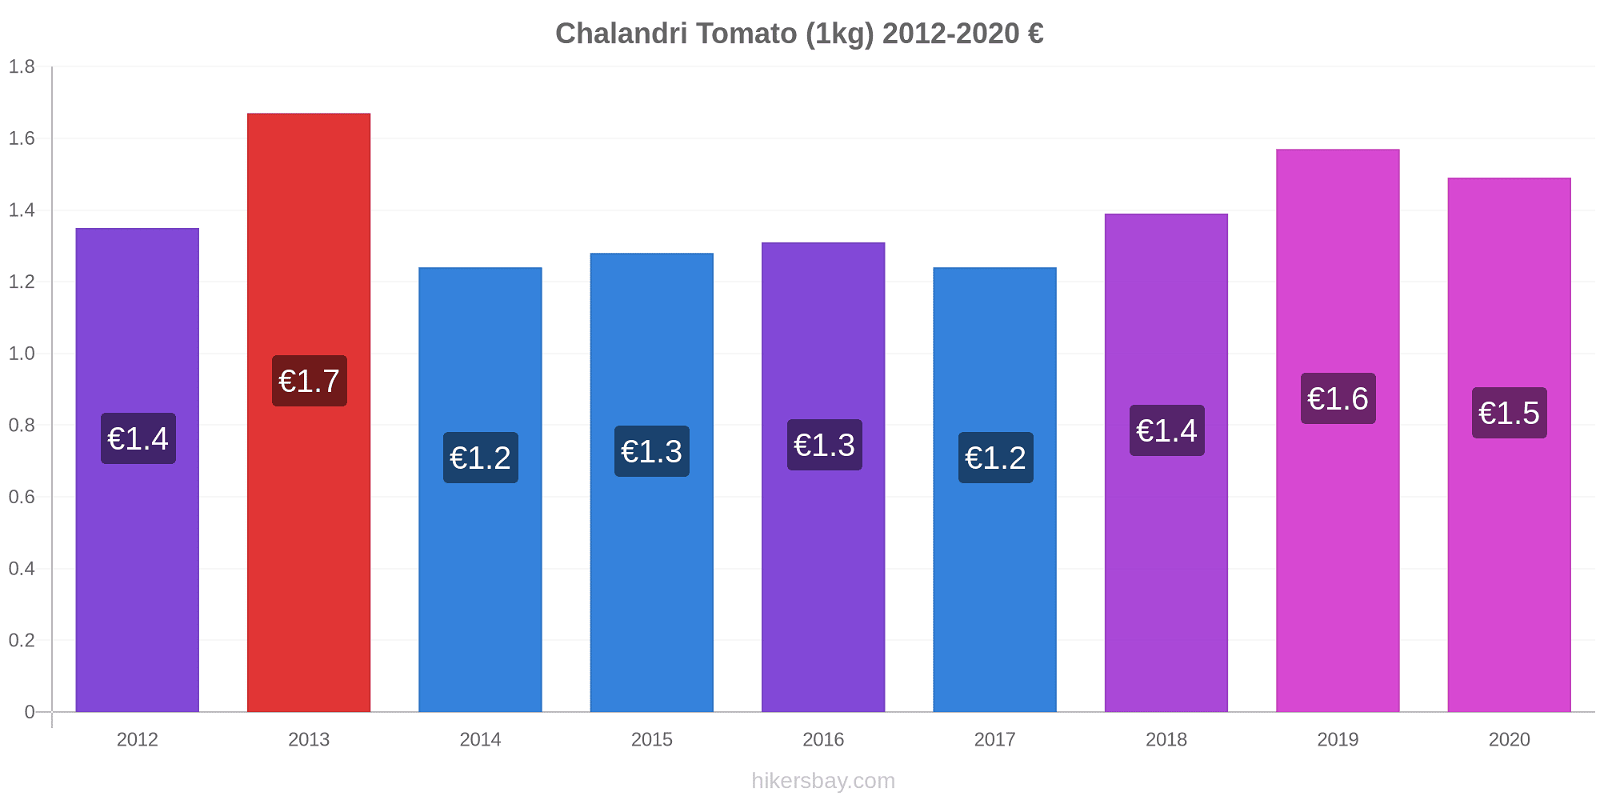 Chalandri price changes Tomato (1kg) hikersbay.com